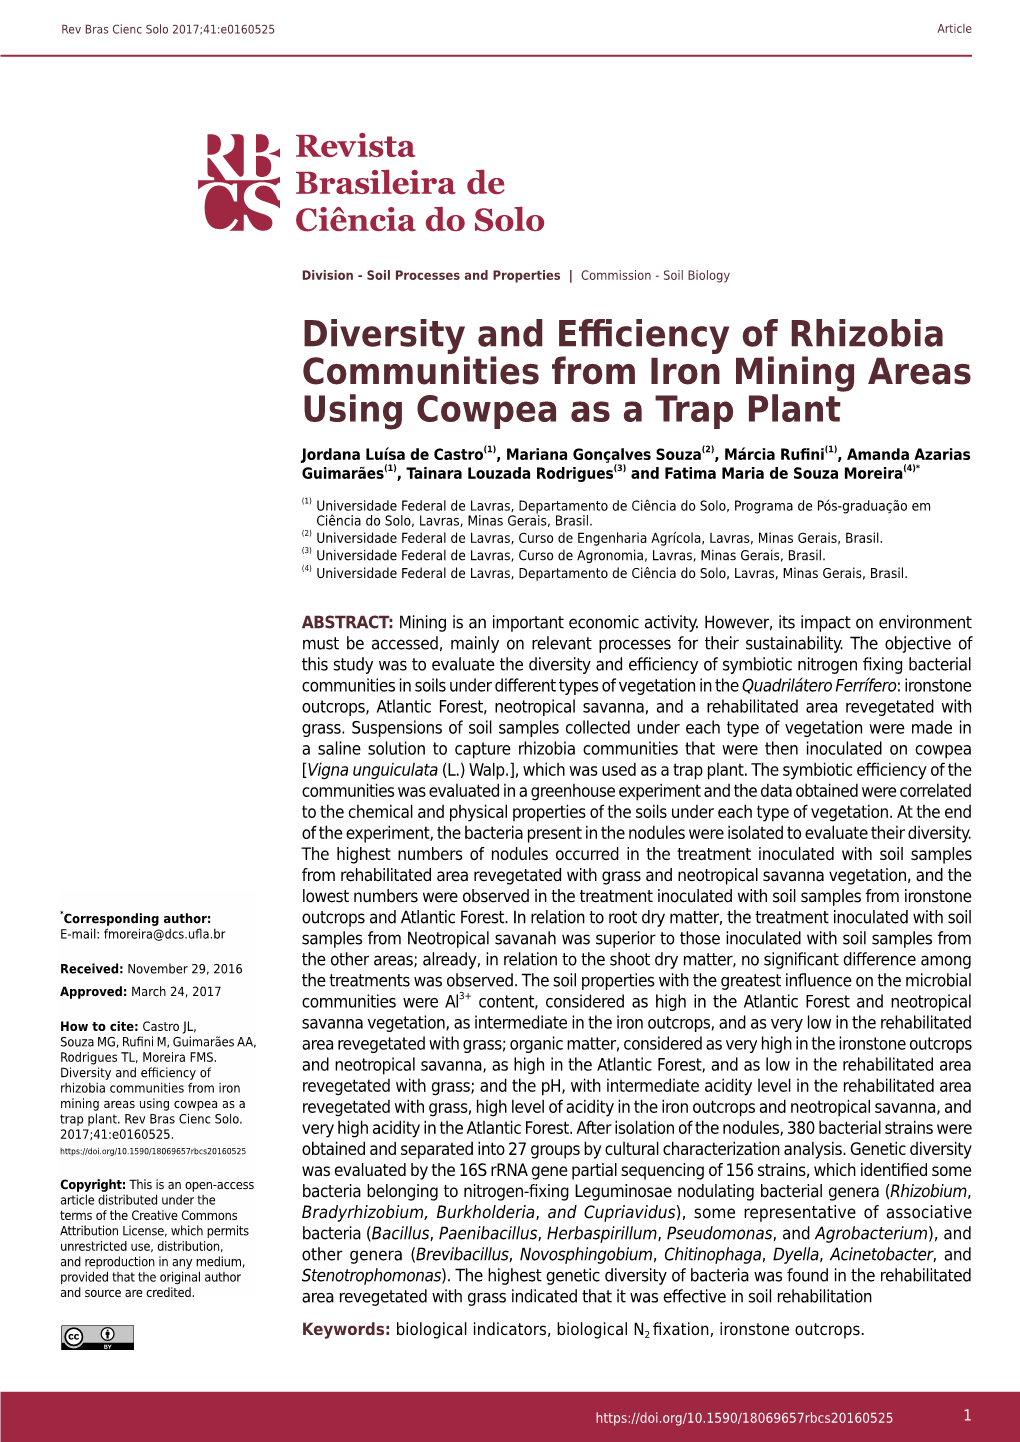 Diversity and Efficiency of Rhizobia Communities from Iron Mining